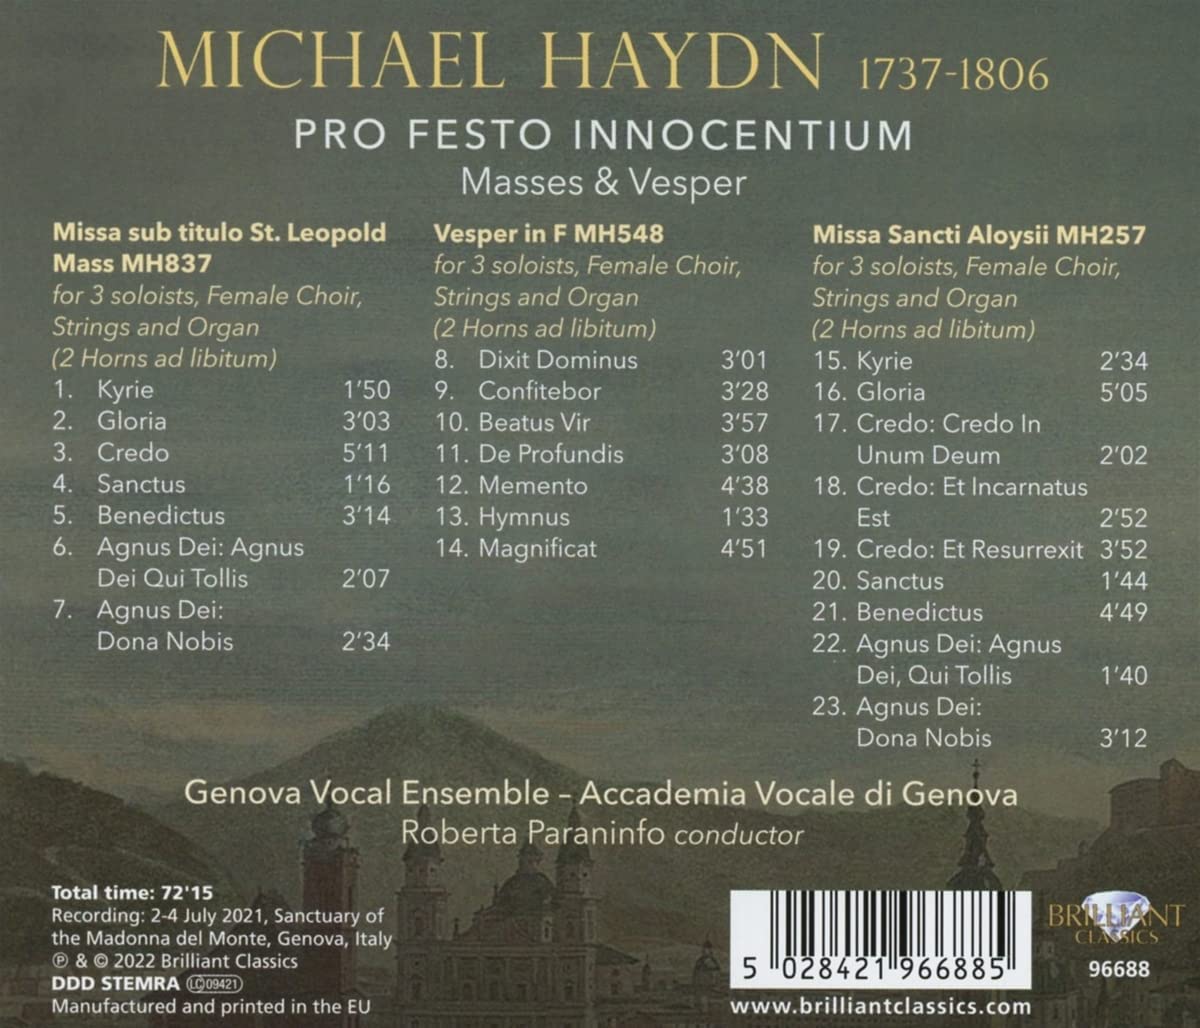 Roberta Paraninfo 미하엘 하이든: 미사와 저녁 기도 (Michael Haydn: Pro Festo Innocentium Masses & Vesper)